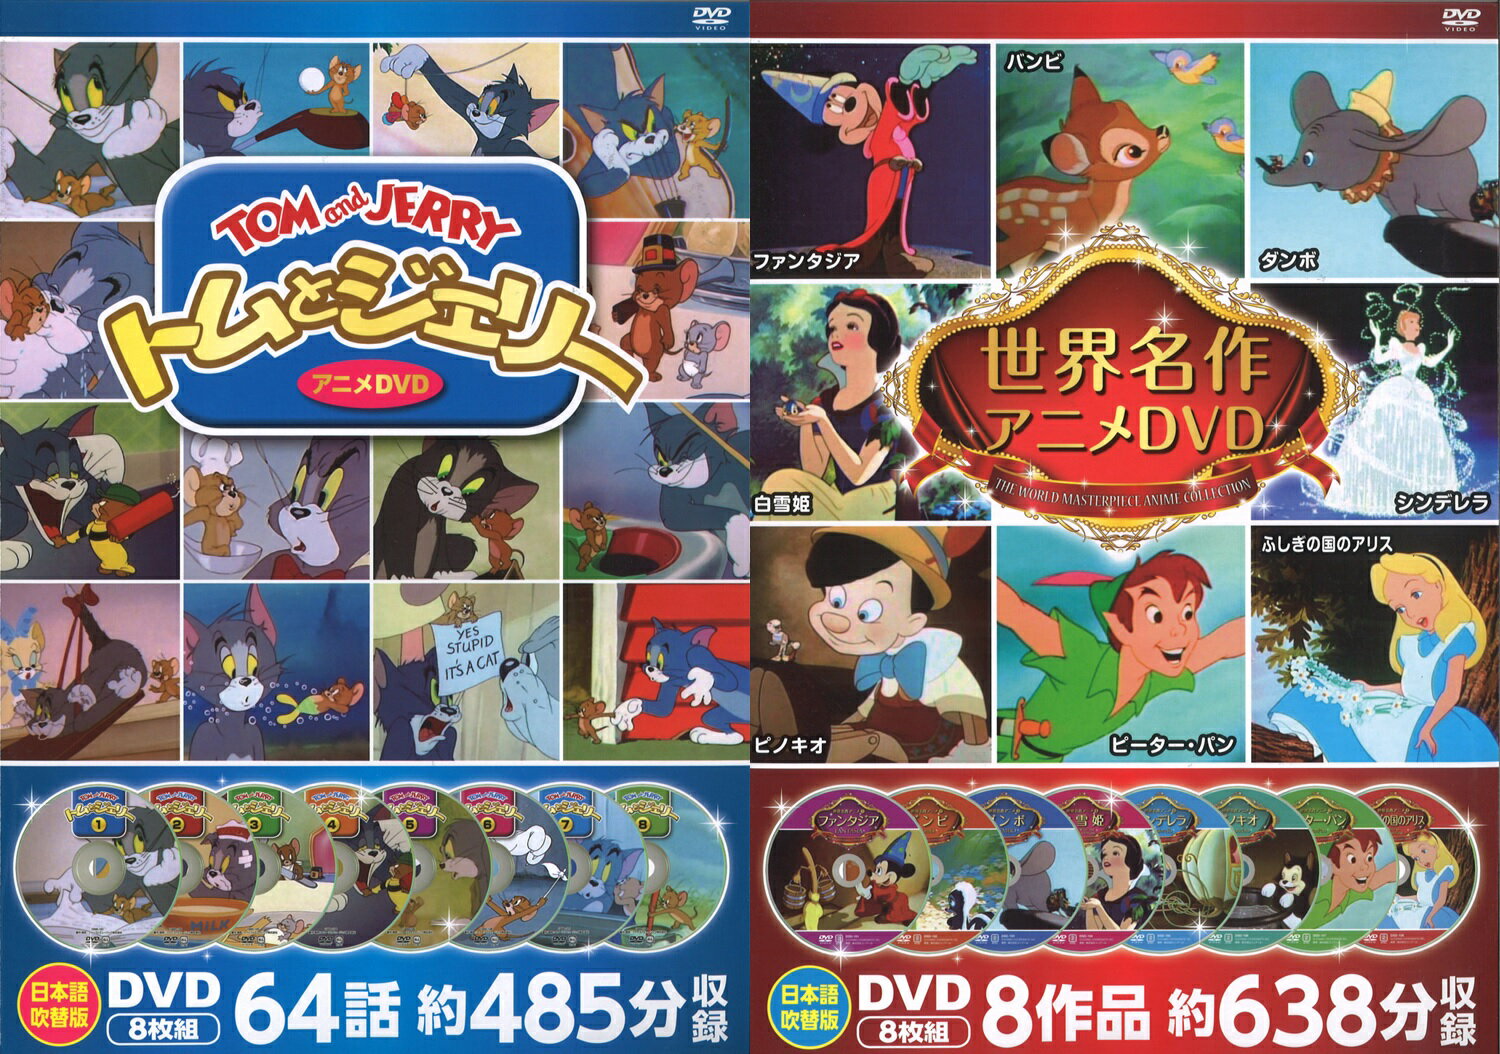 BD / ディズニー / カールじいさんの空飛ぶ家 コレクターズ・ボックス(Blu-ray) (2Blu-ray+DVD) (数量限定版) / VWBS-1098